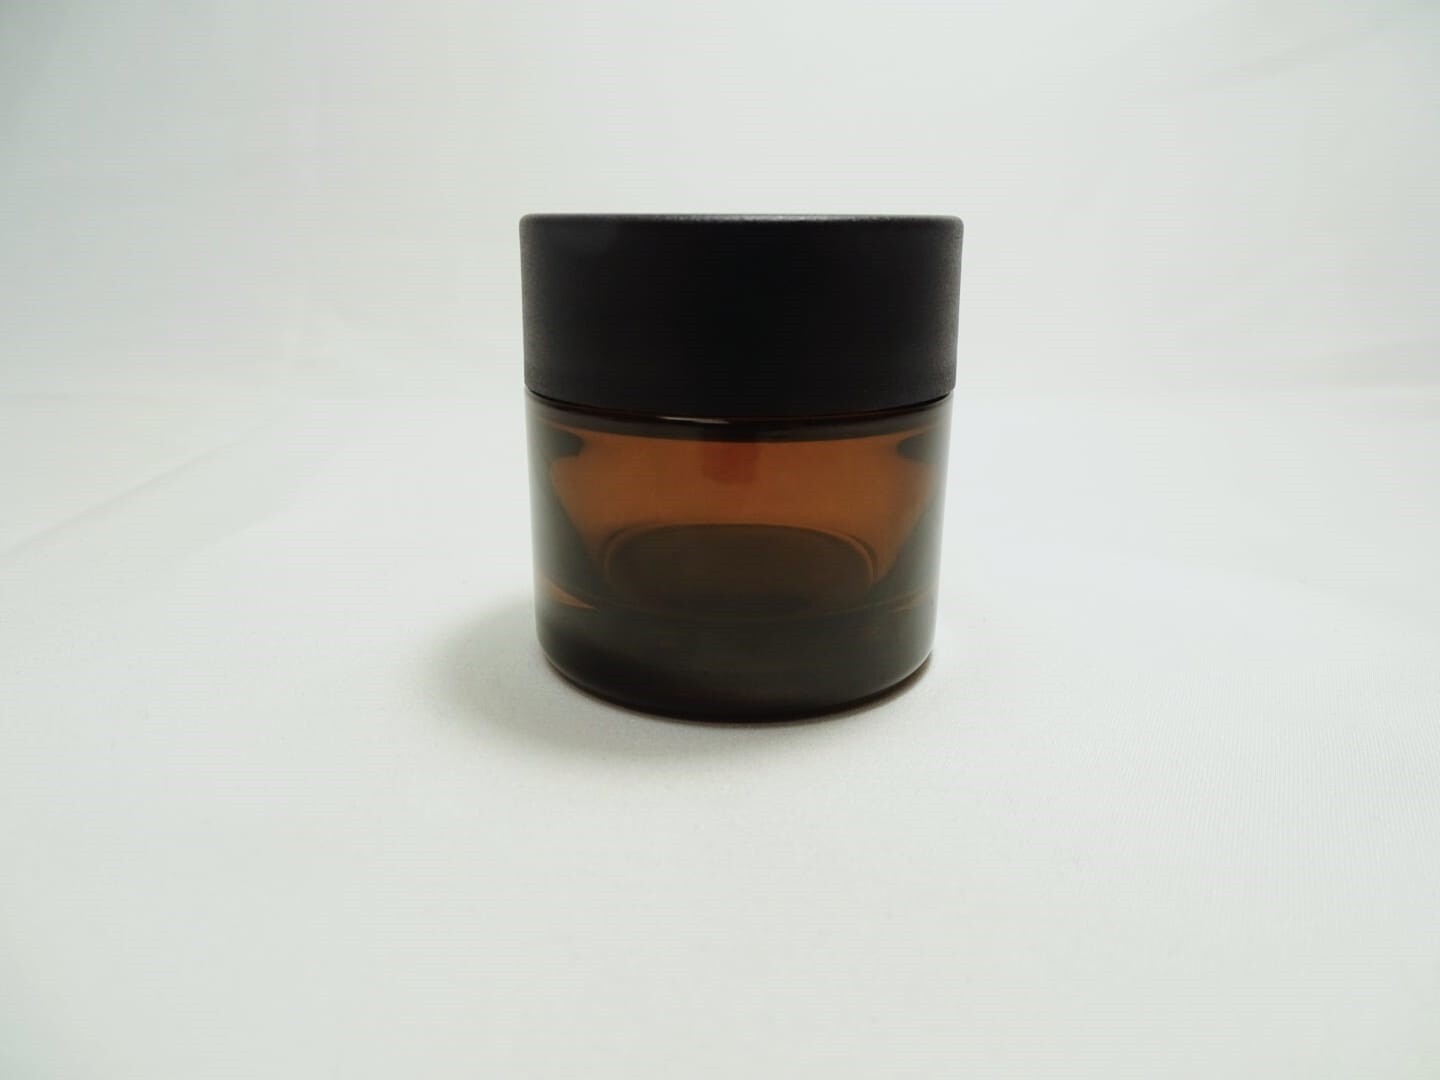 Tarro vidrio cosmética topacio 50 ml con tapa negra mate